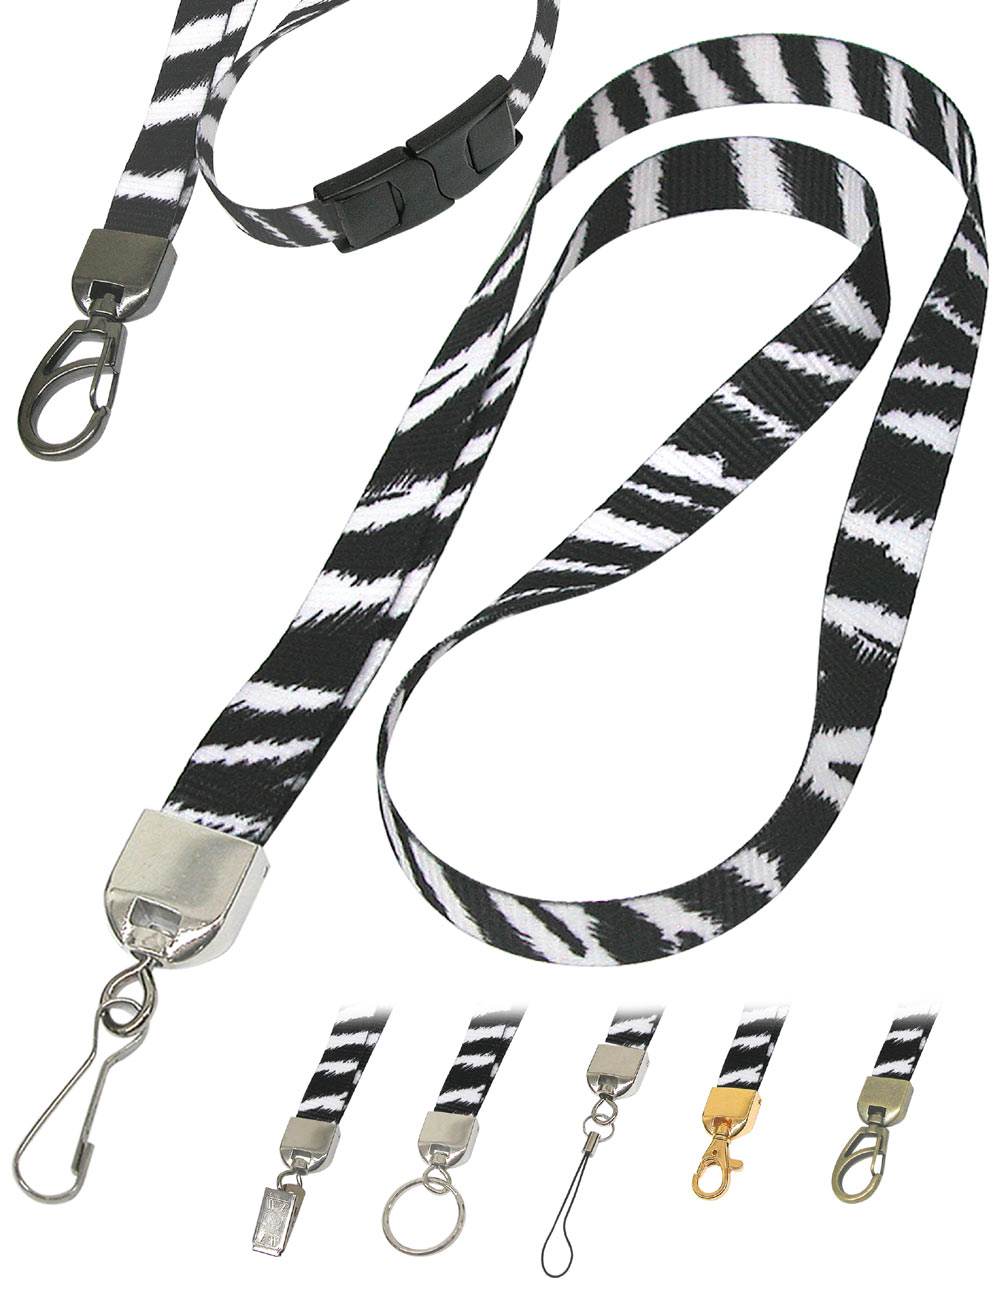 Zebra Lanyards: Cool Zebra Print Lanyards, Zebra Stripes or Zebra Pattern Printed Lanyards.